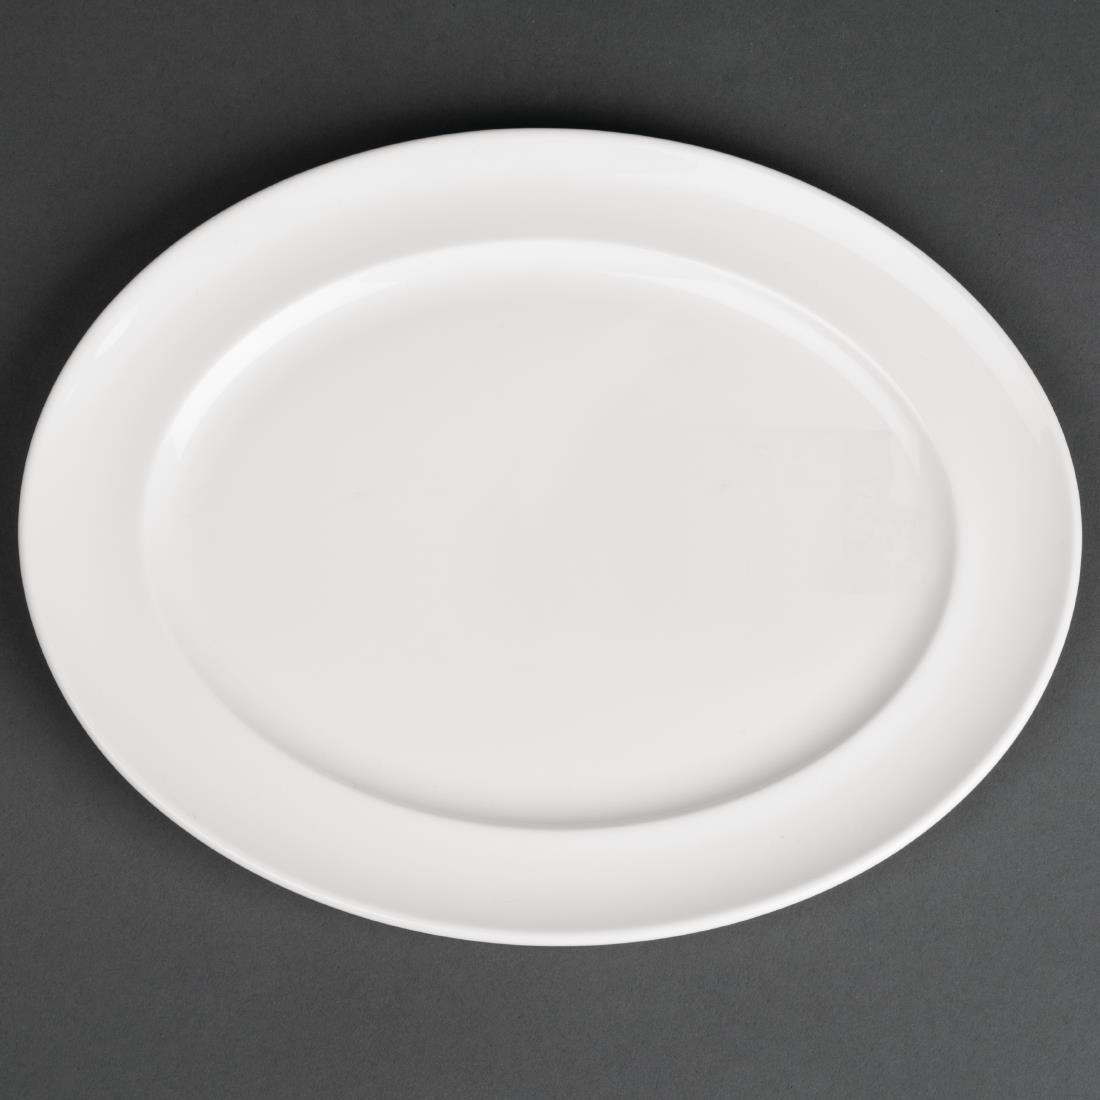 Royal Porcelain Maxadura Advantage Oval Platters 235mm (Pack of 12) - CG234  - 1